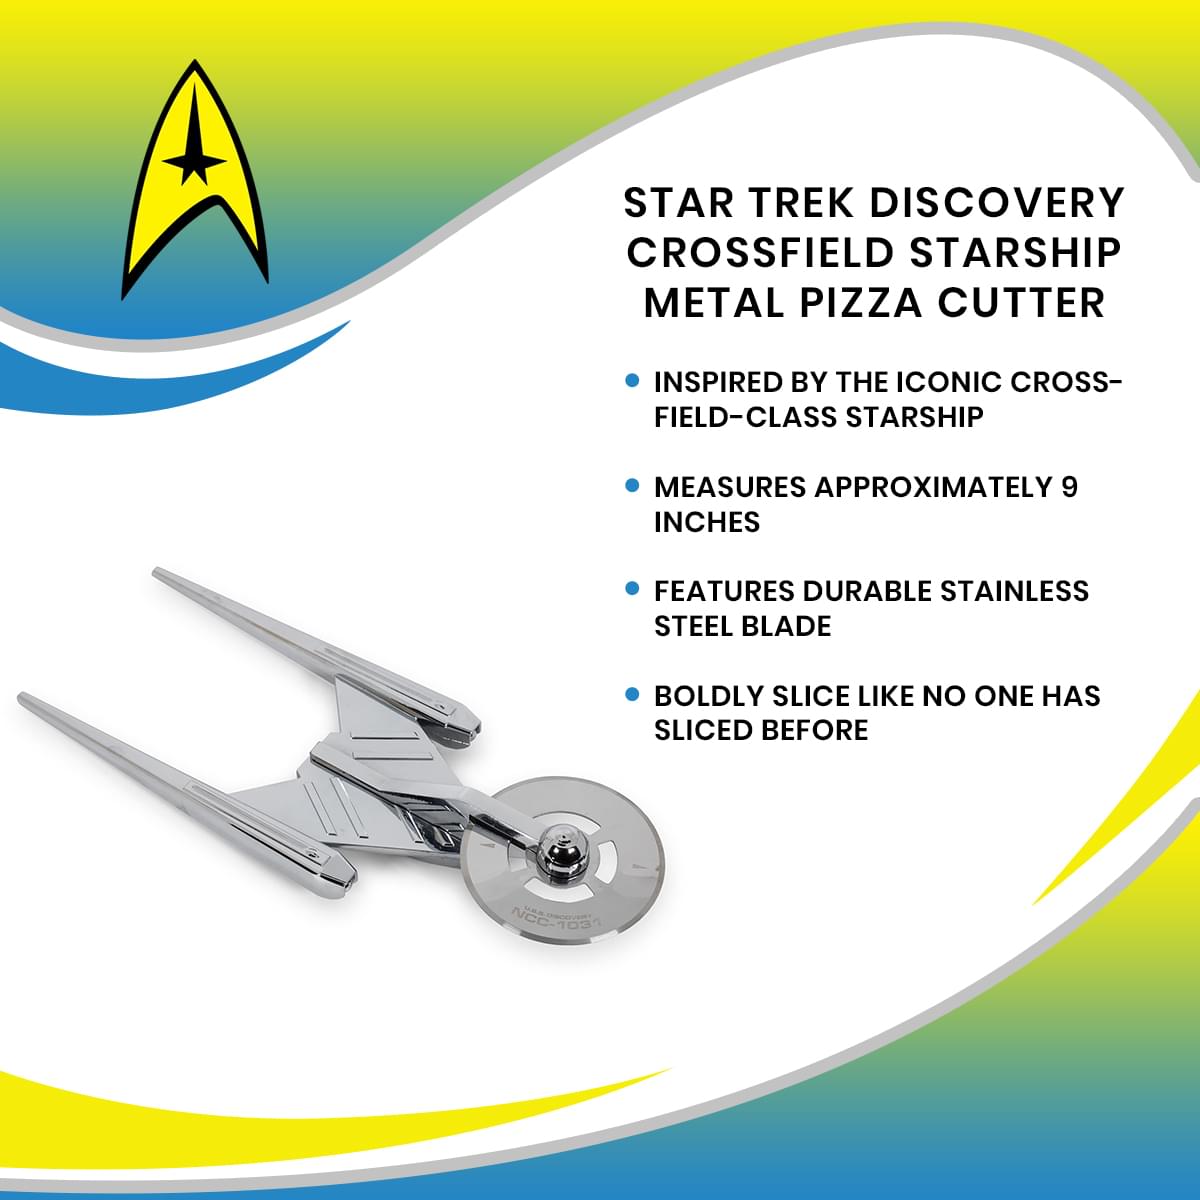 Star Trek Discovery Crossfield Starship Metal Pizza Cutter